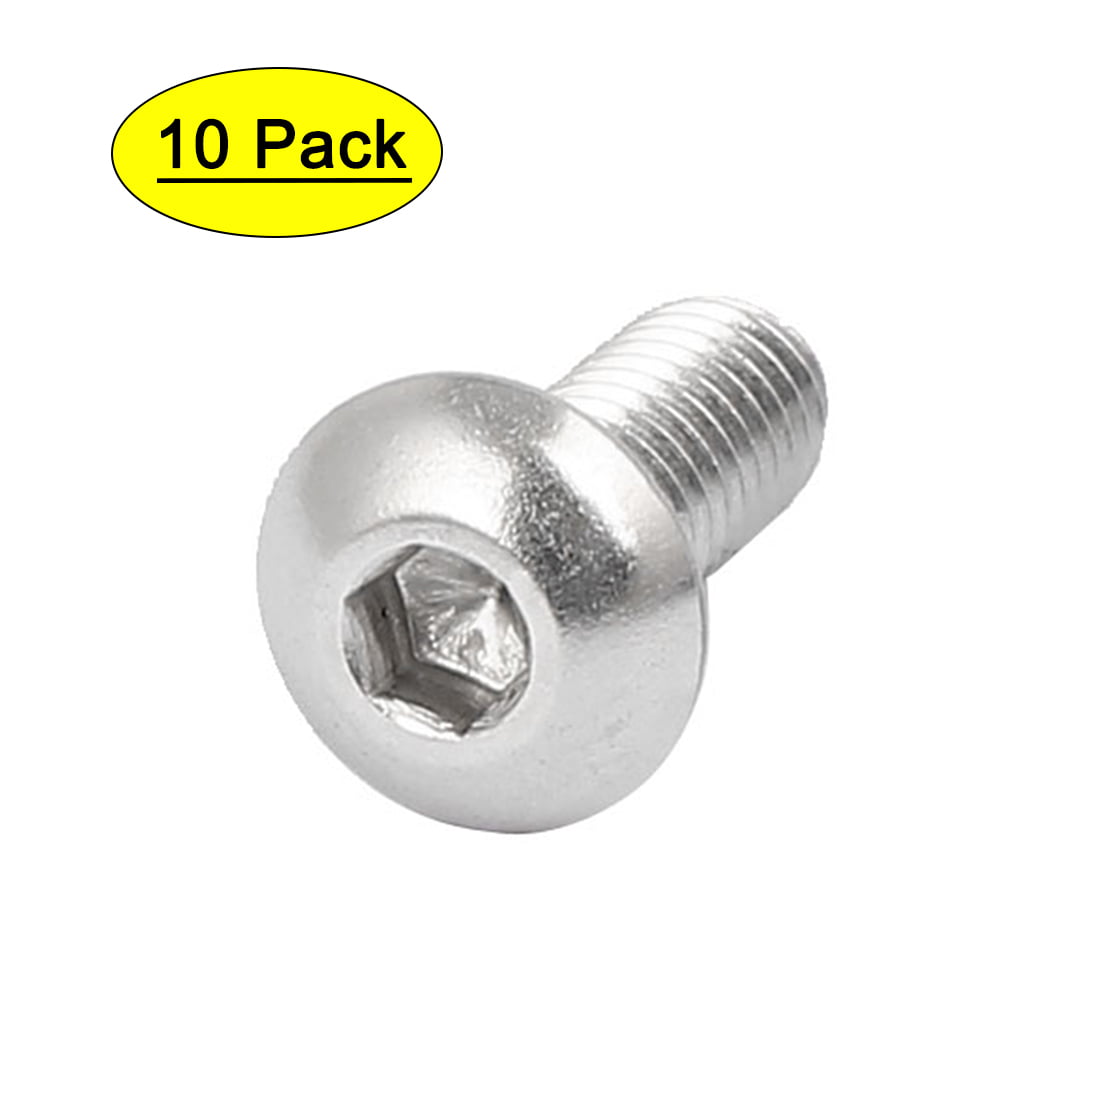 M6 x 10mm Button head socket screw 304 stainless steel kit QTY-100 bolts 